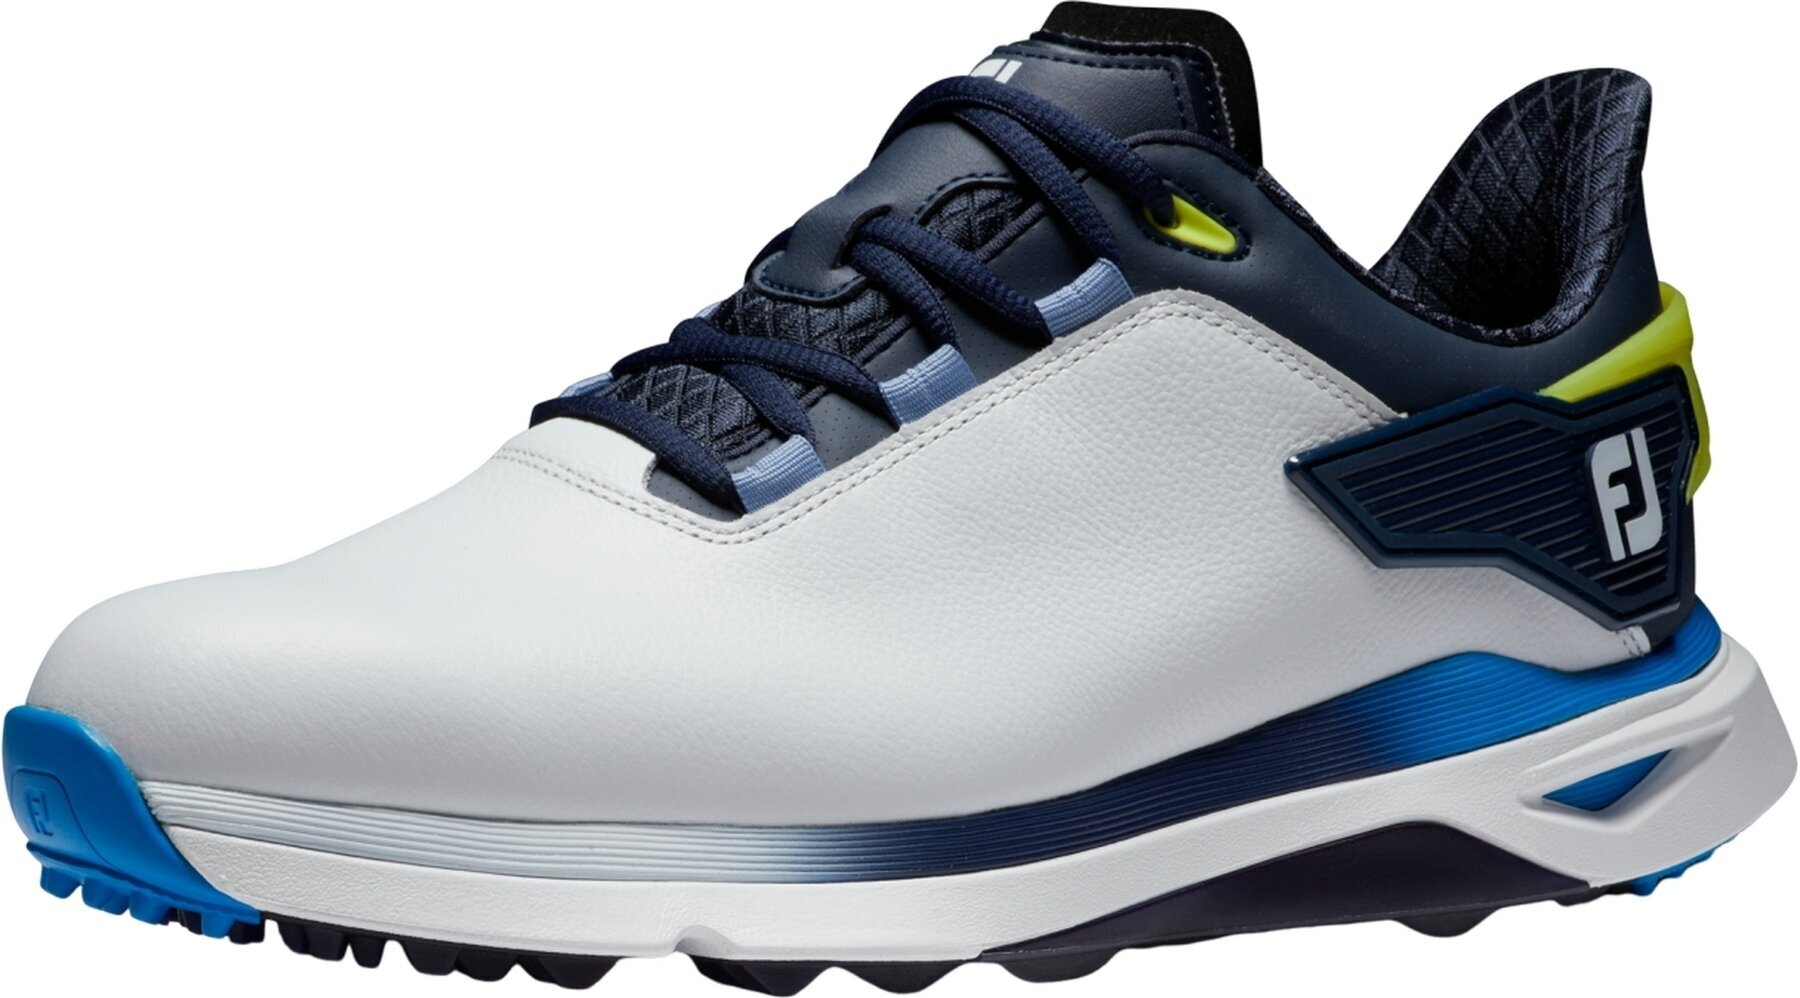 Footjoy PRO SLX Mens Golf Shoes White/Navy/Blue 44,5